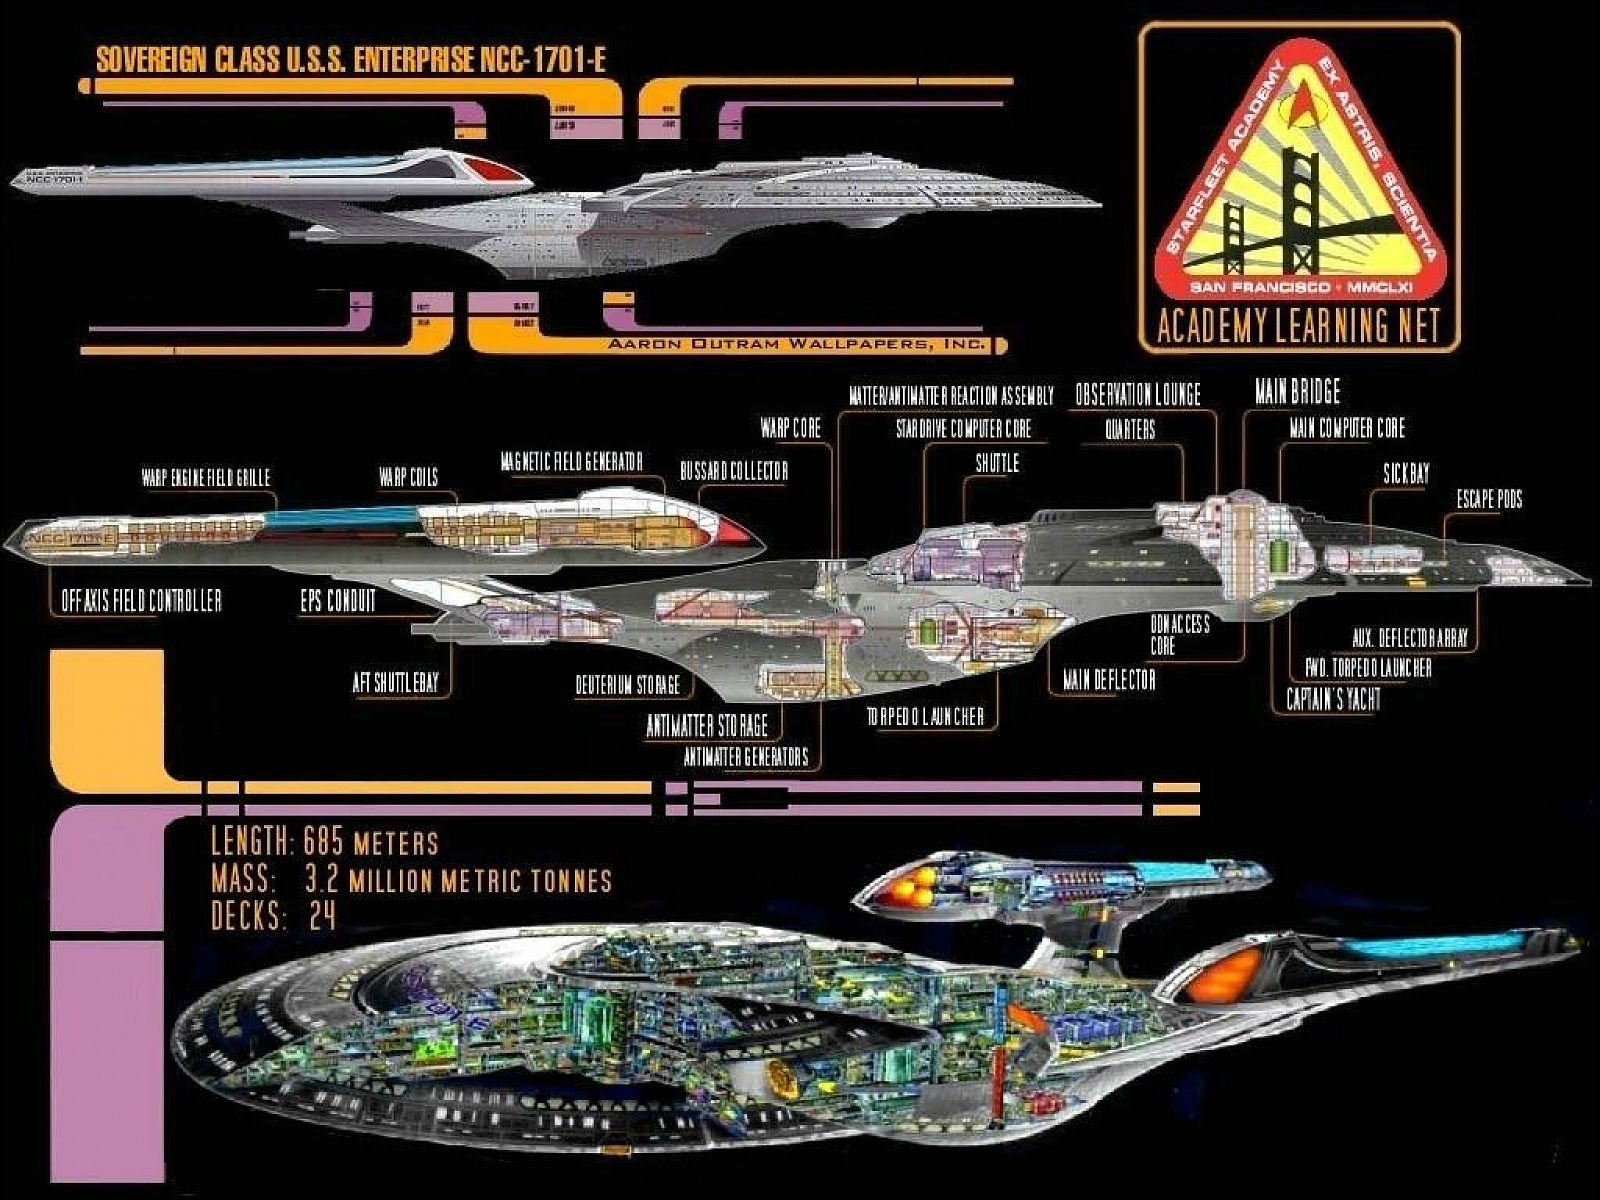 star, Trek, Futuristic, Action, Adventure, Sci fi, Space, Thriller, Mystery, Spaceship, Poster Wallpaper